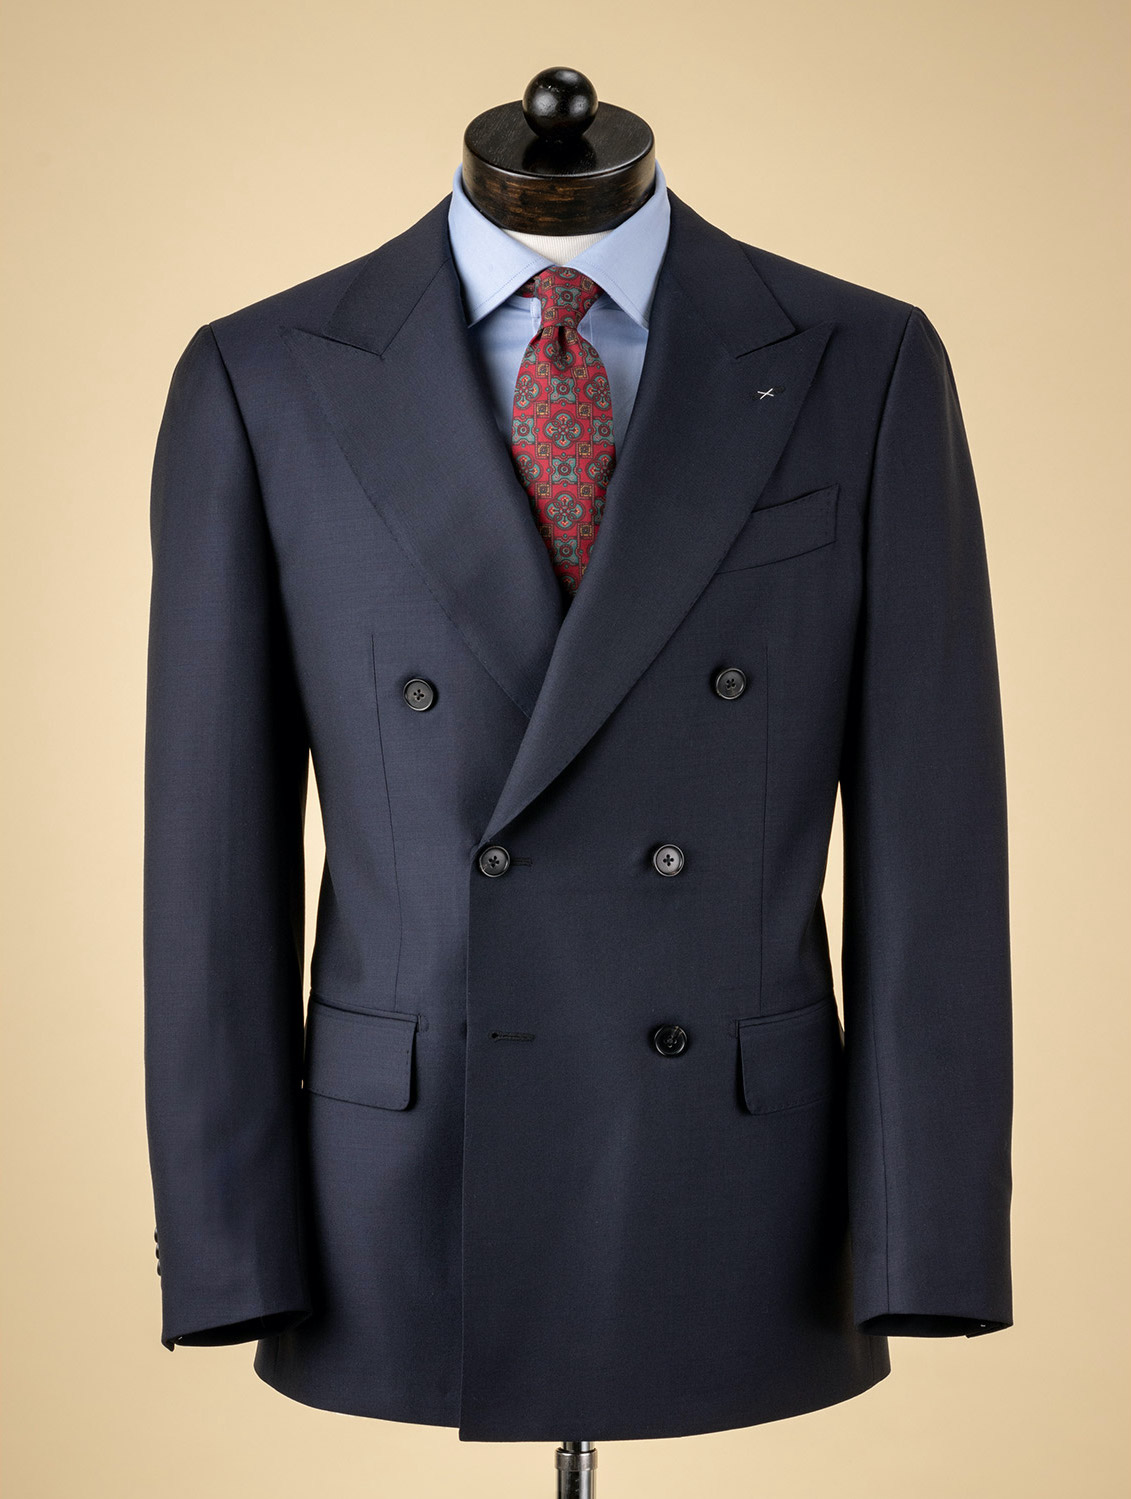 Sale Alert—Suit Sale at Spier & Mackay, Code SUITS for Extra 20% Off ...